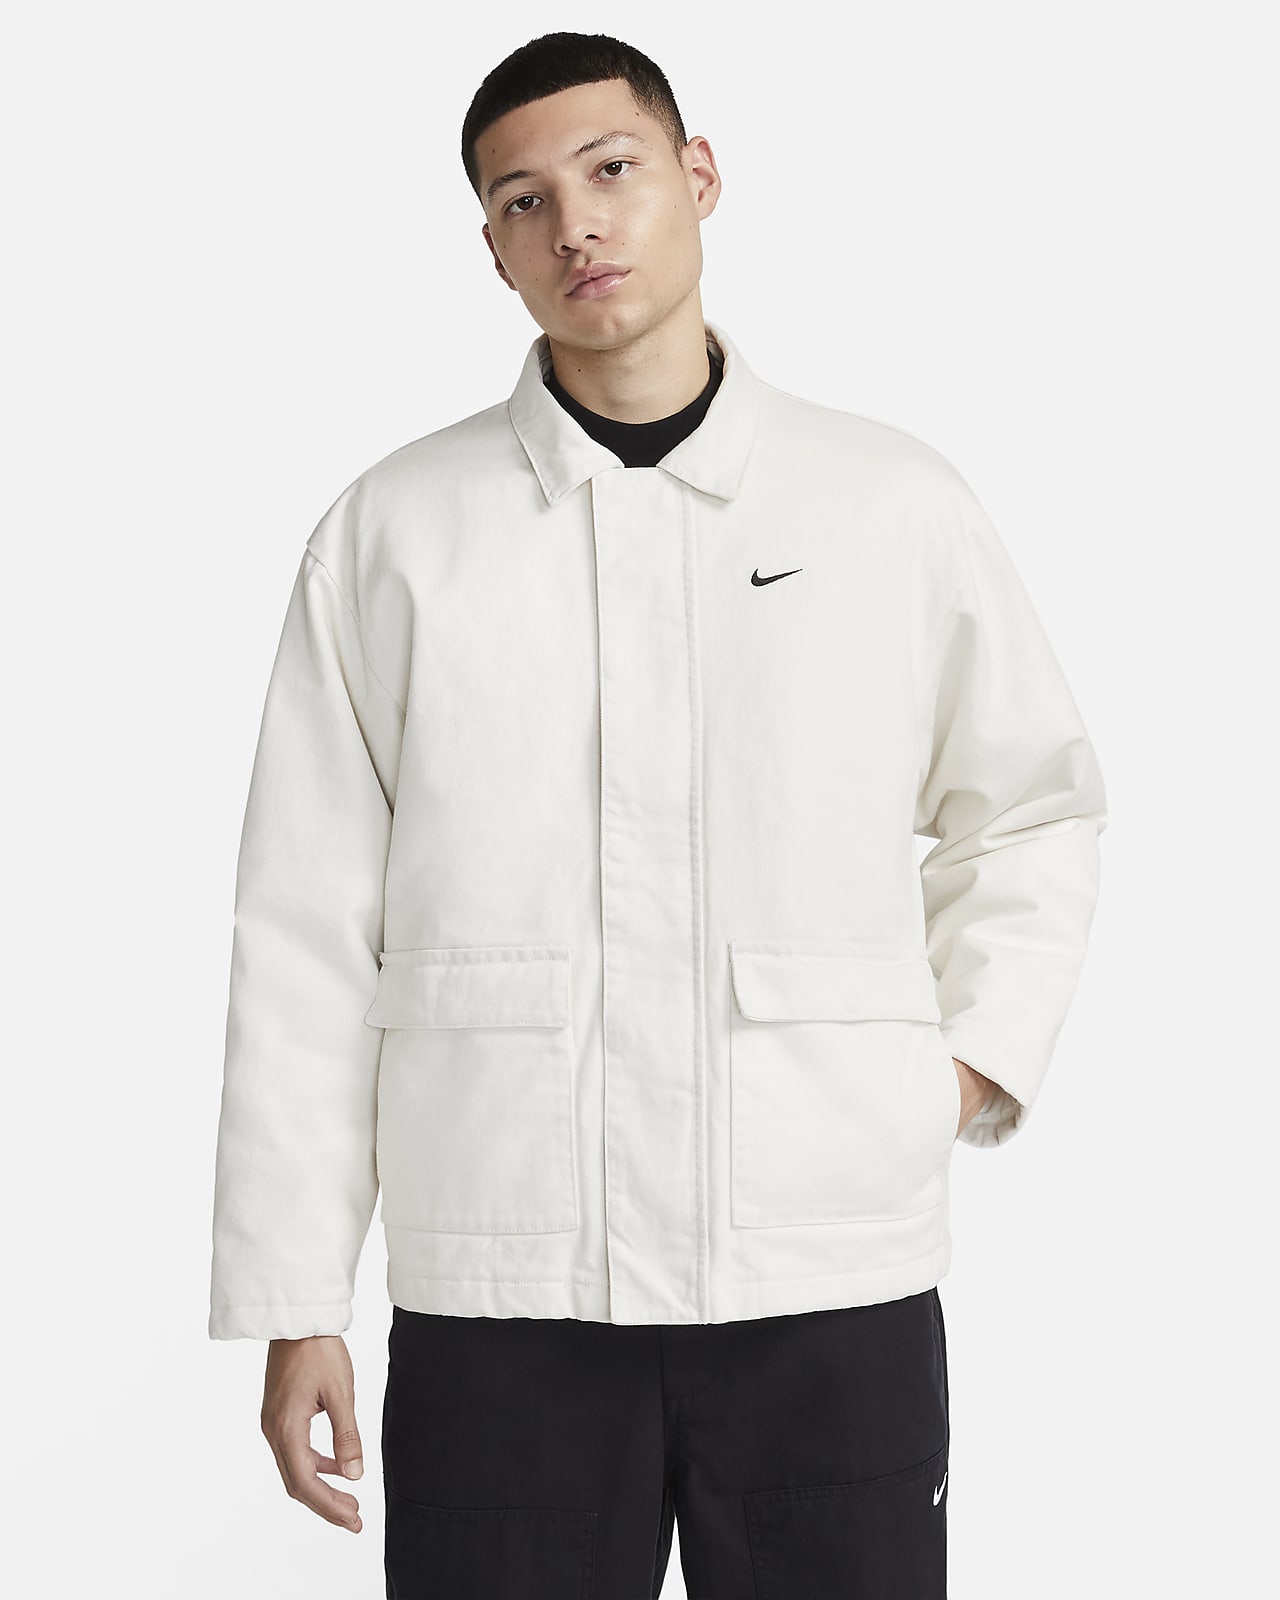 Nike Life Men's Insulated Work Jacket